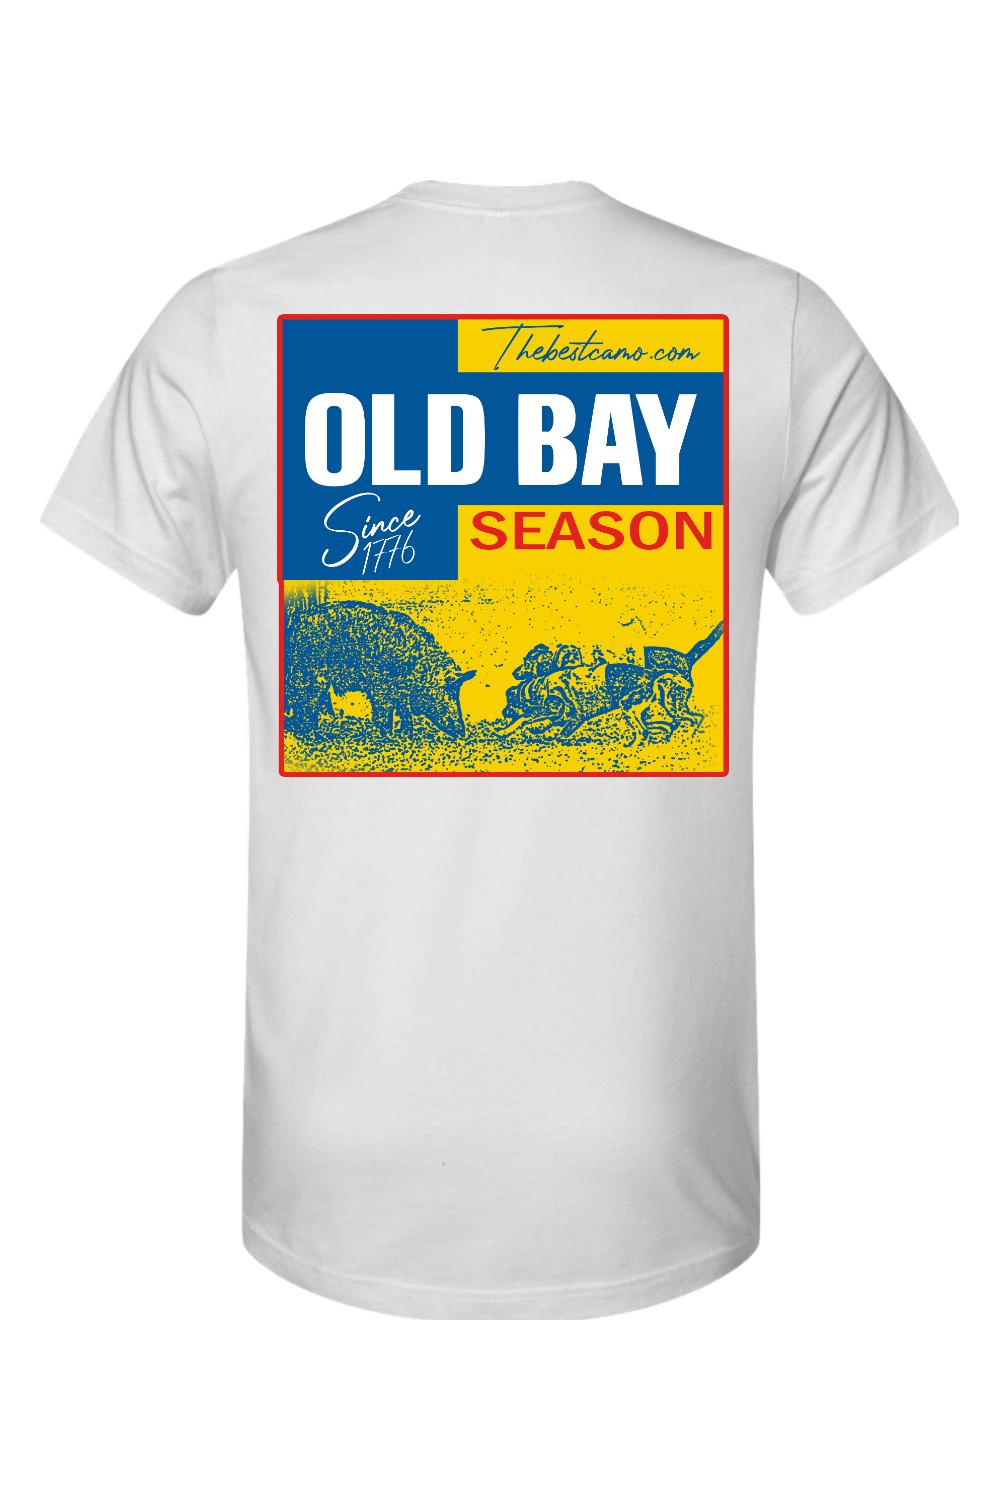 old bay hogbaying.com